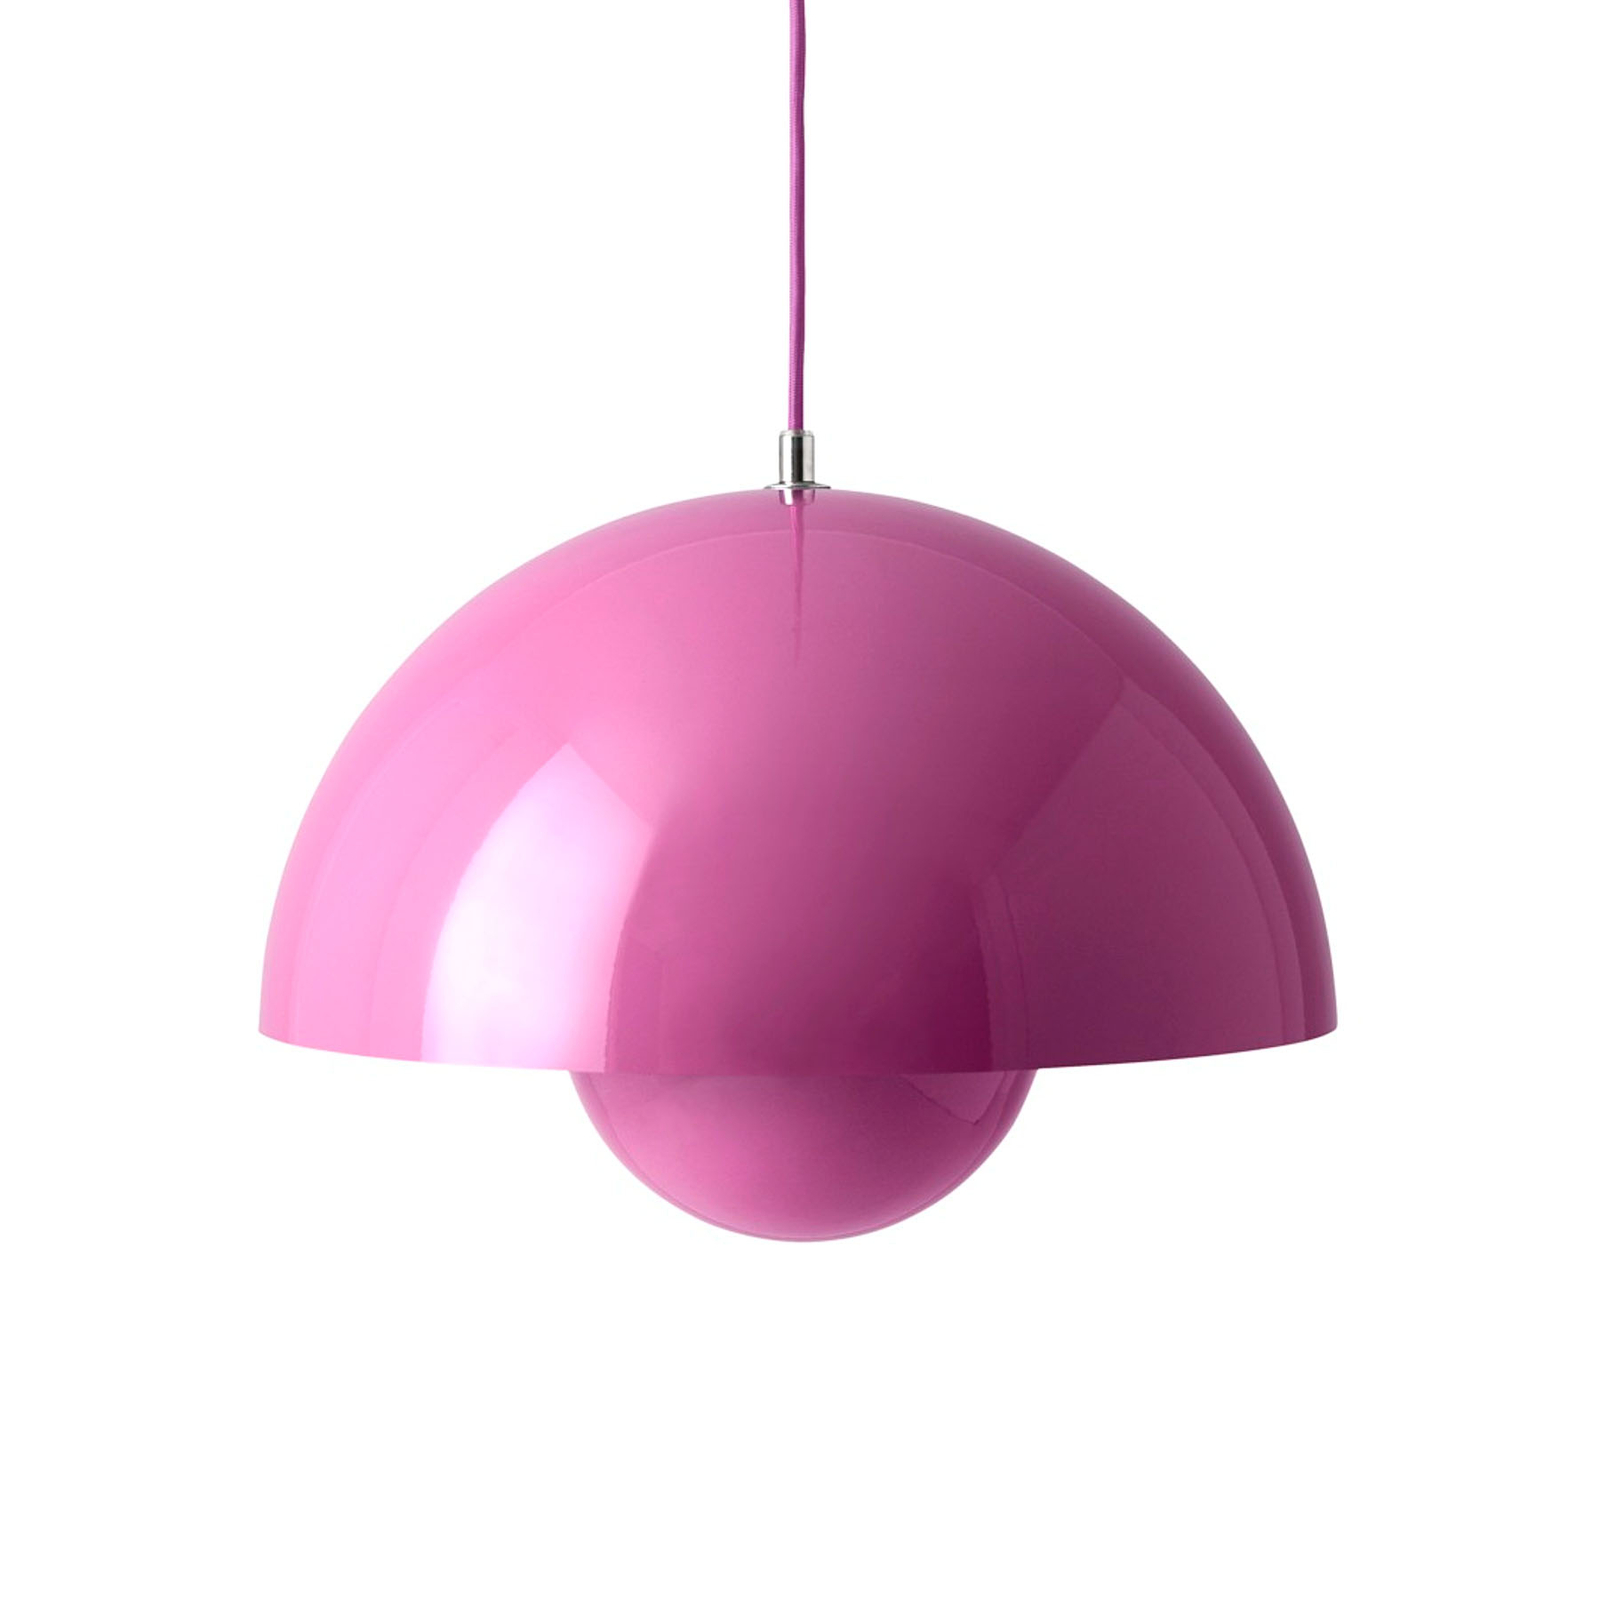 &Tradition hanglamp Bloempot VP7, Ø 37 cm, roze